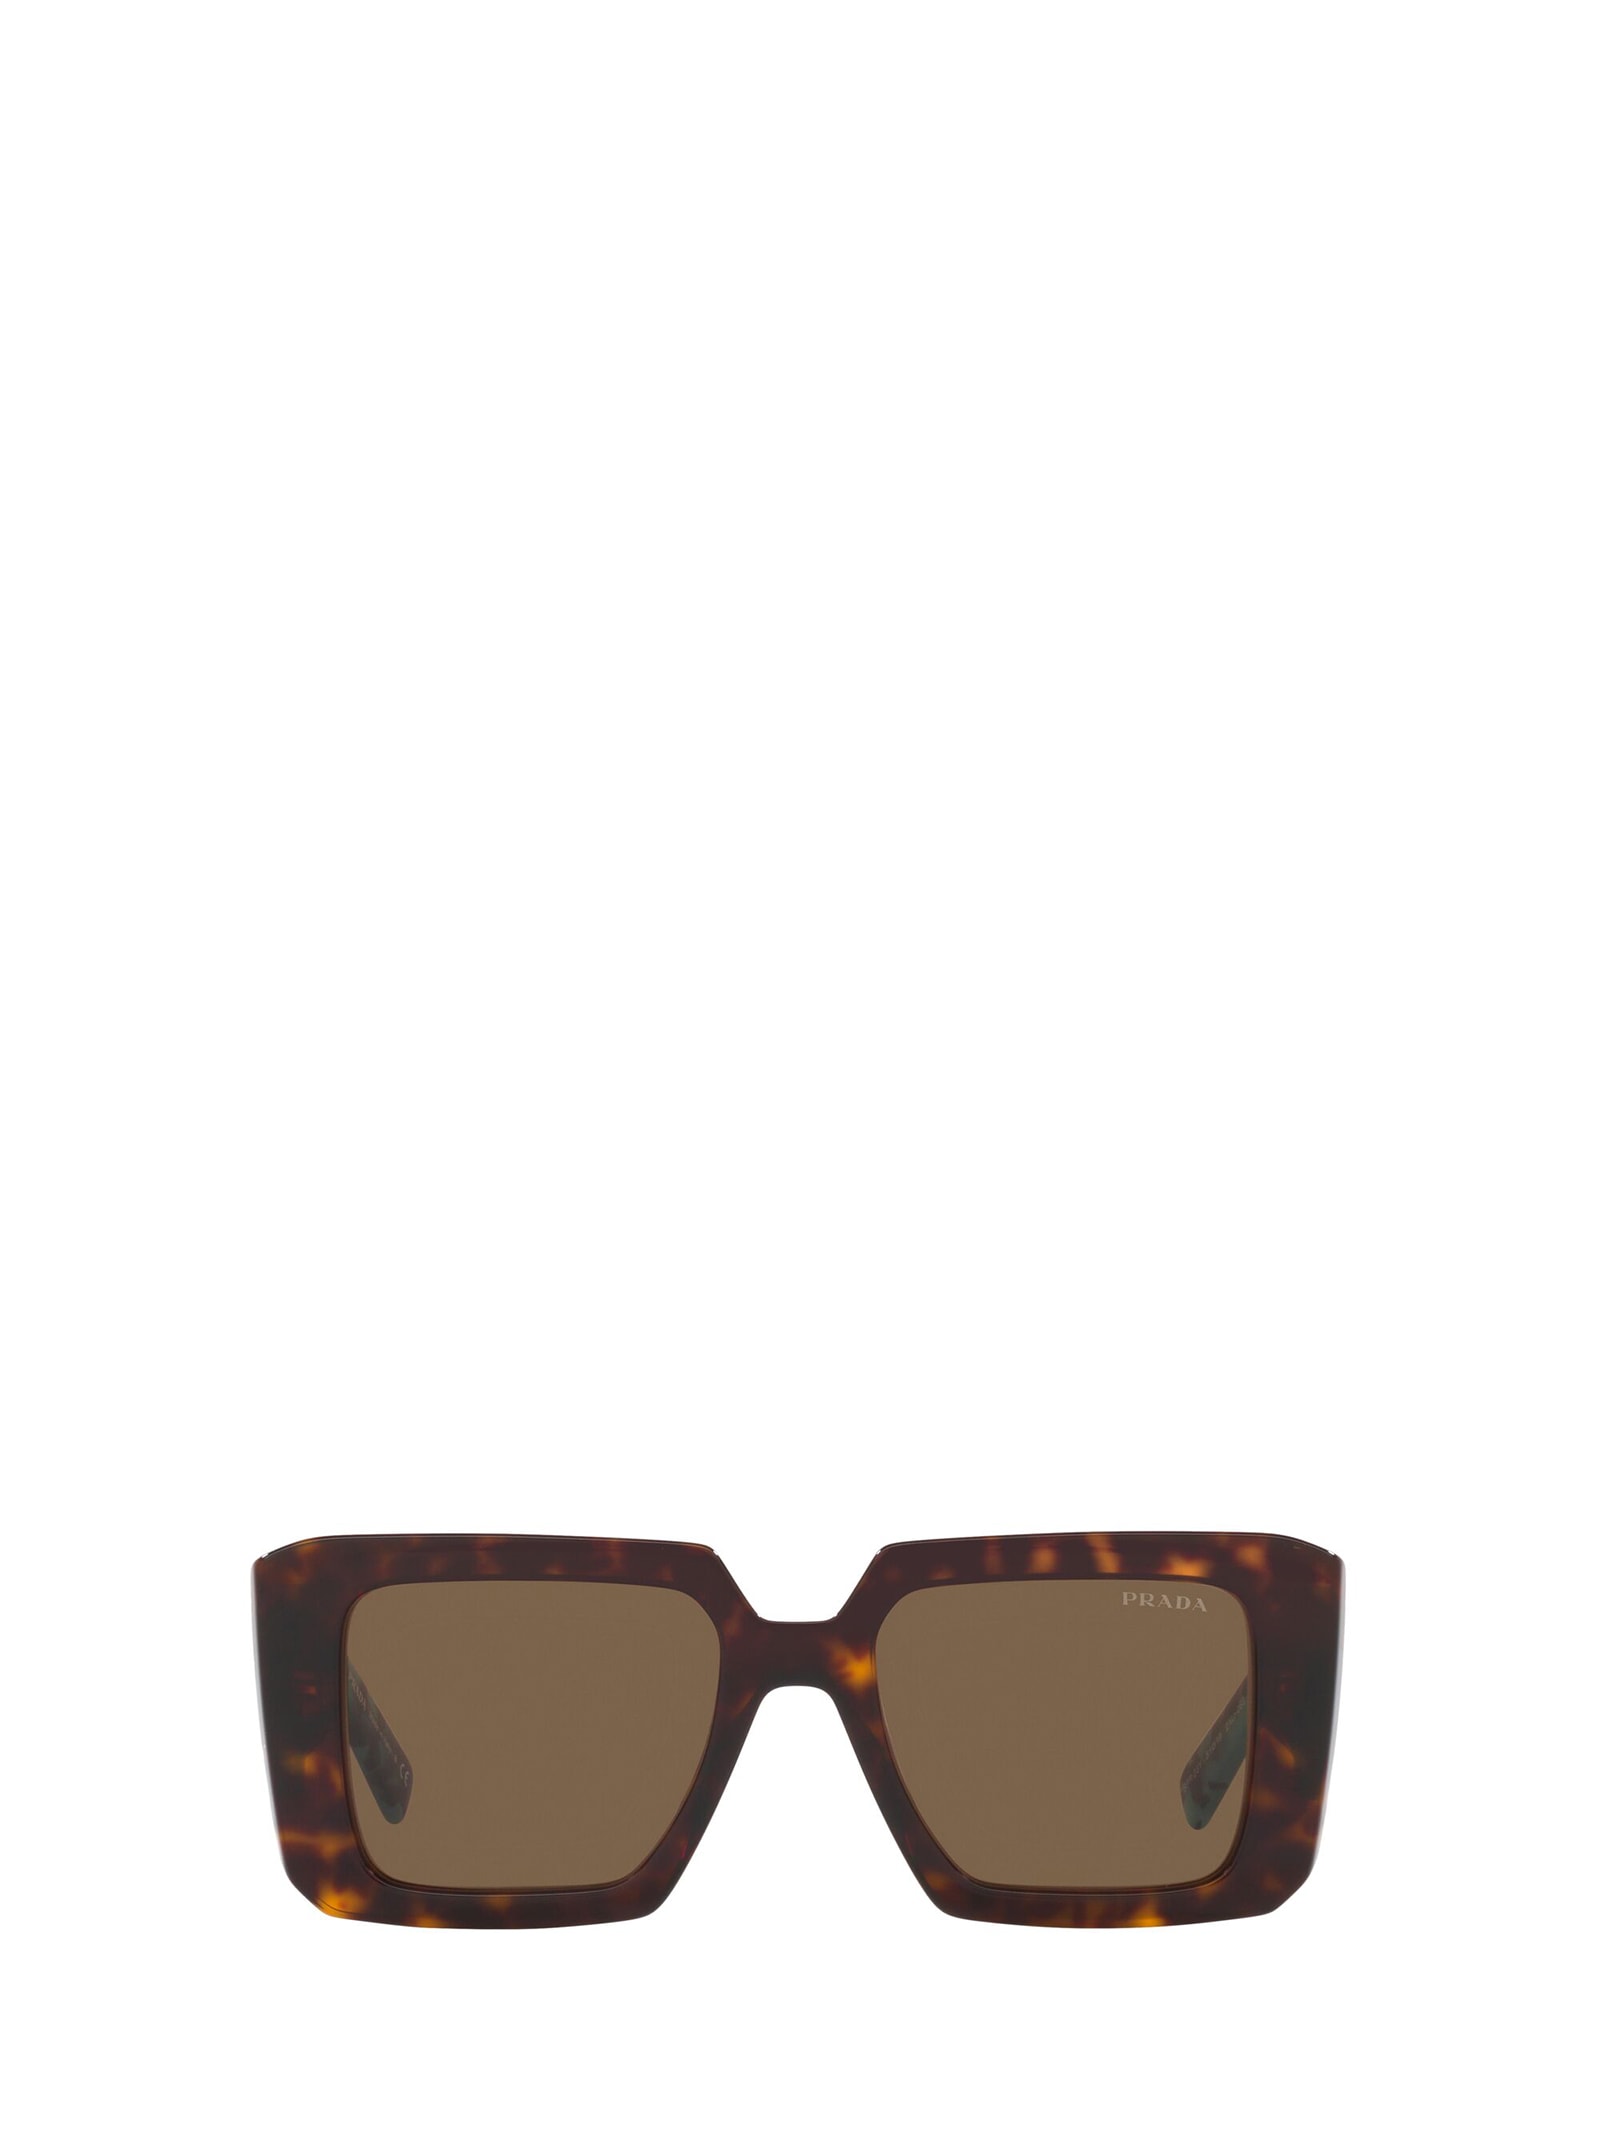 Prada Eyewear Pr 23ys Tortoise Sunglasses